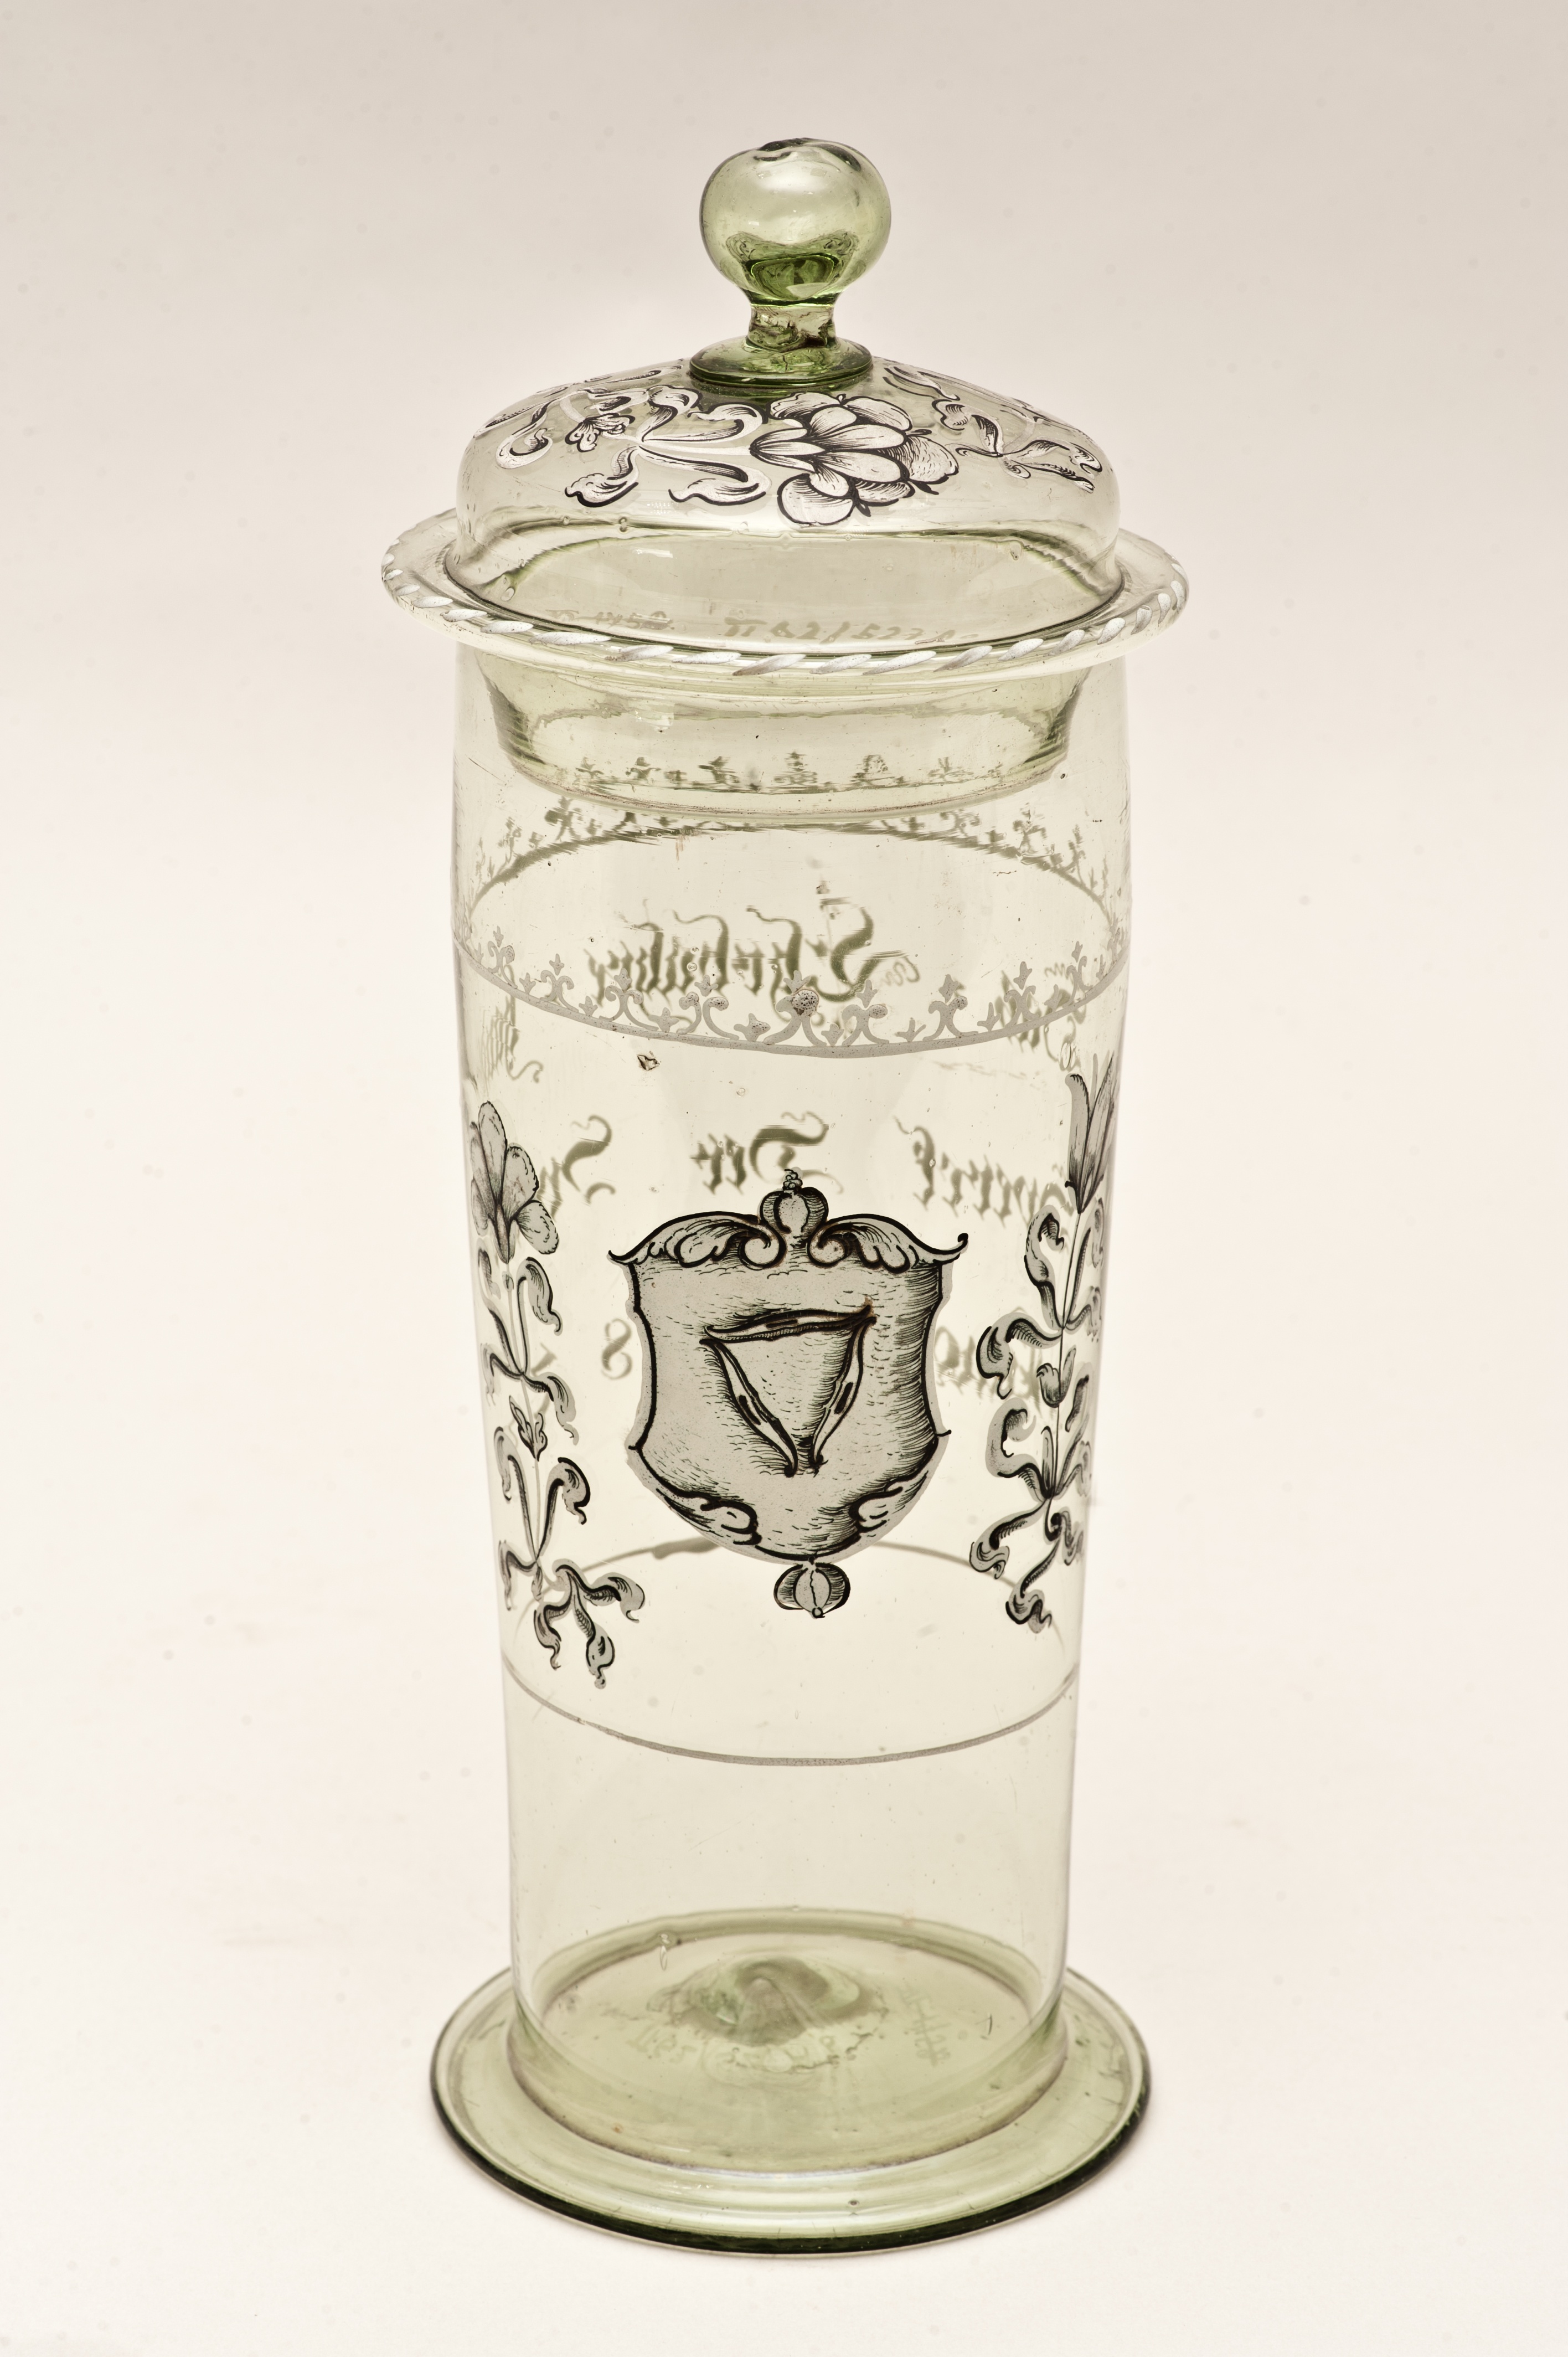 Glas-Deckelhumpen der Weber aus dem Jahr 1682 (Stiftung Stadtmuseum Berlin CC BY-NC-ND)